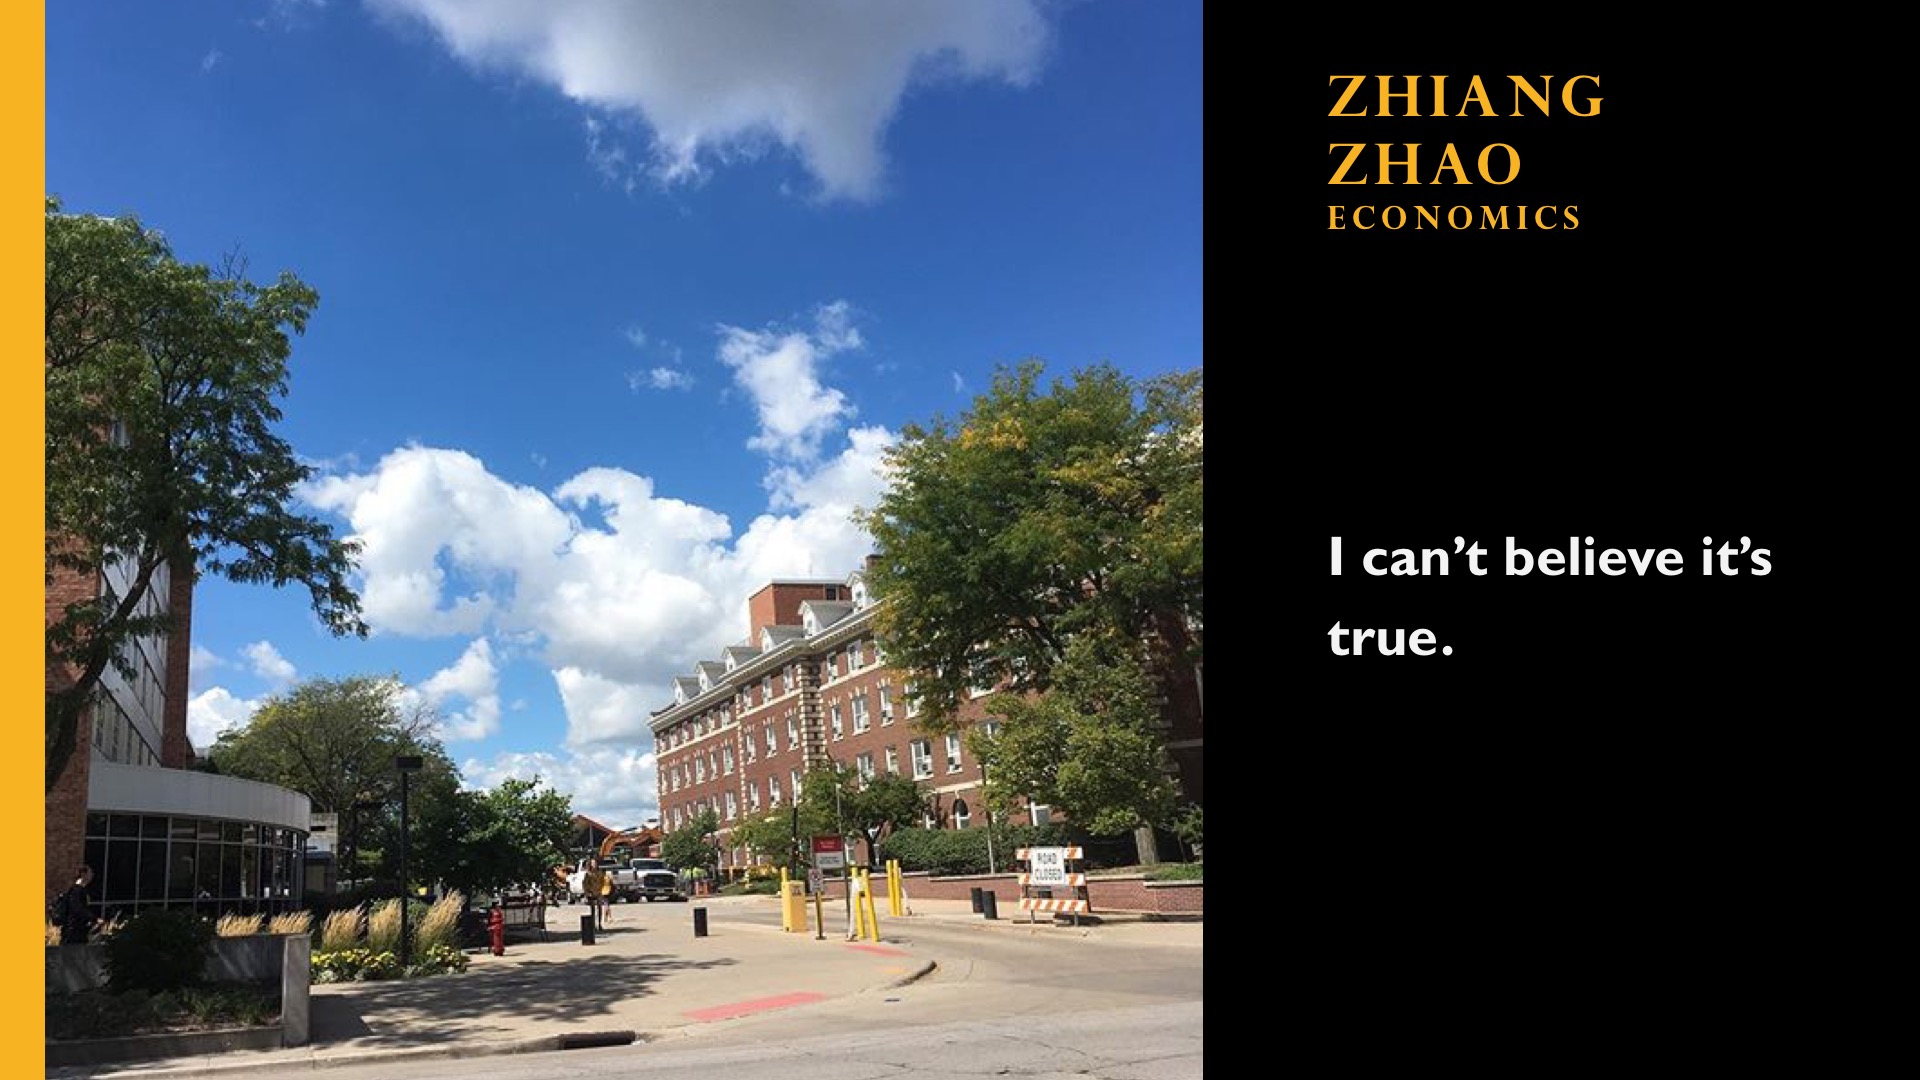 Zhiang Zhao. Economics. I can't believe it's true.